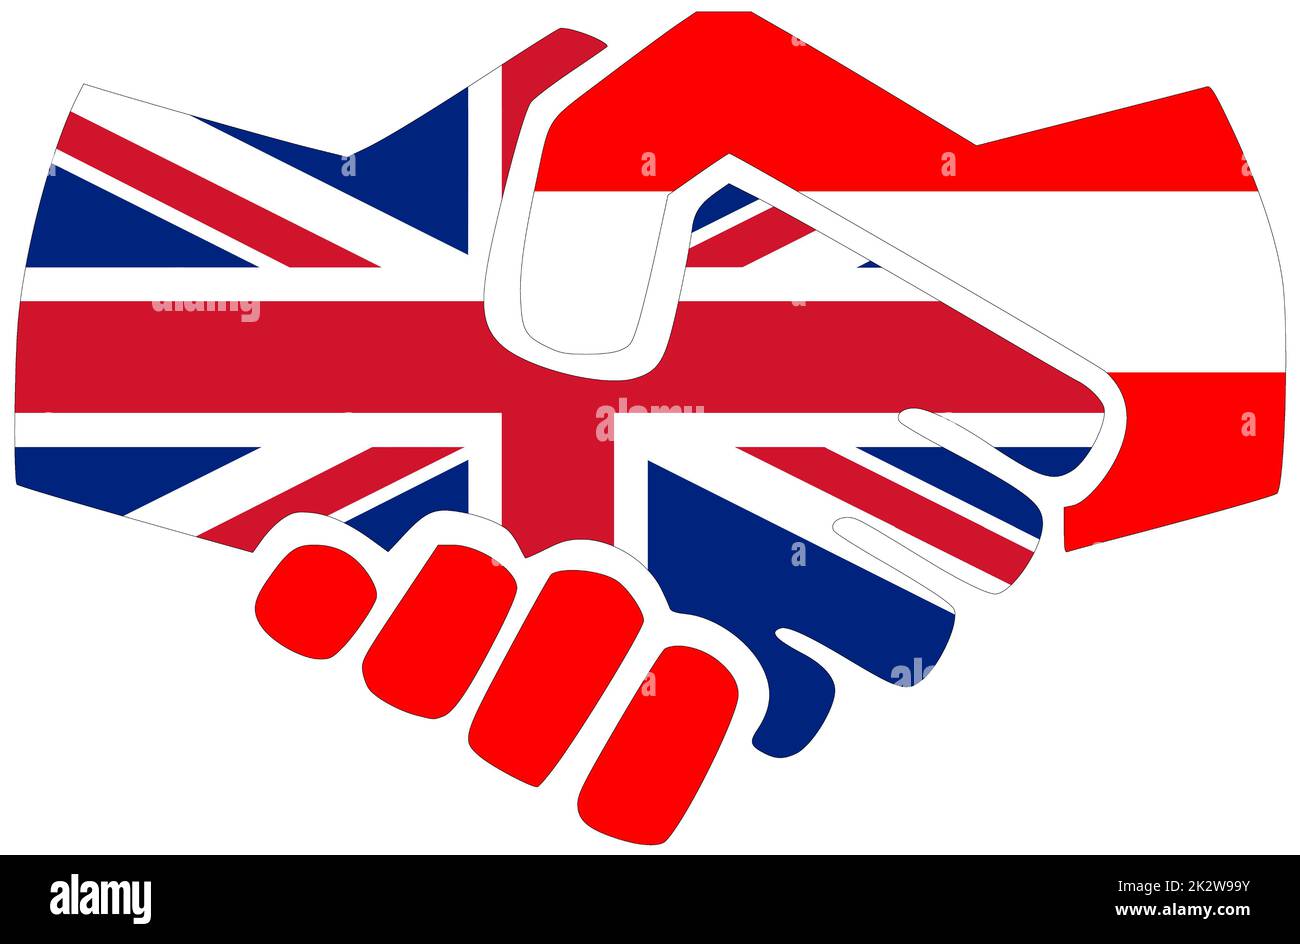 UK - Austria : Handshake, symbol of agreement or friendship Stock Photo